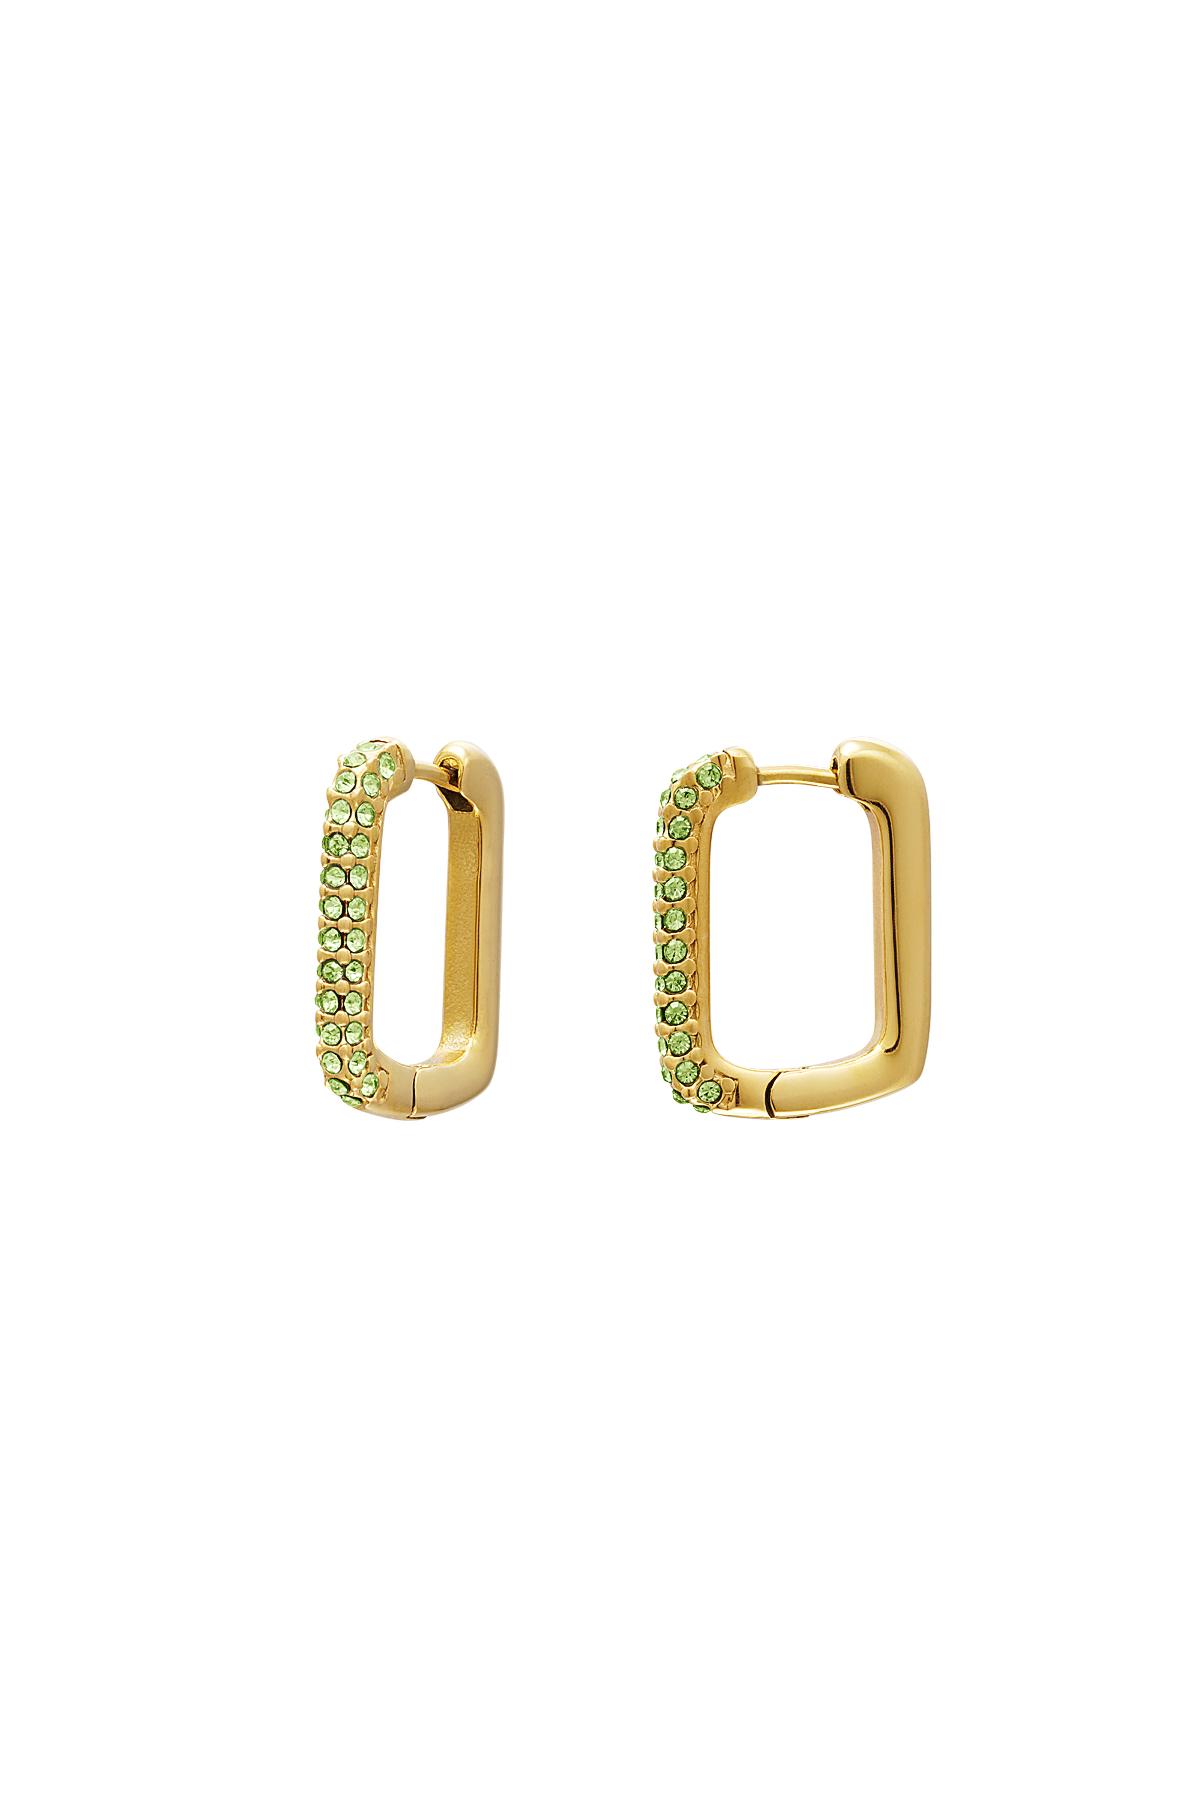 Square earrings zircon stones Green & Gold Stainless Steel h5 